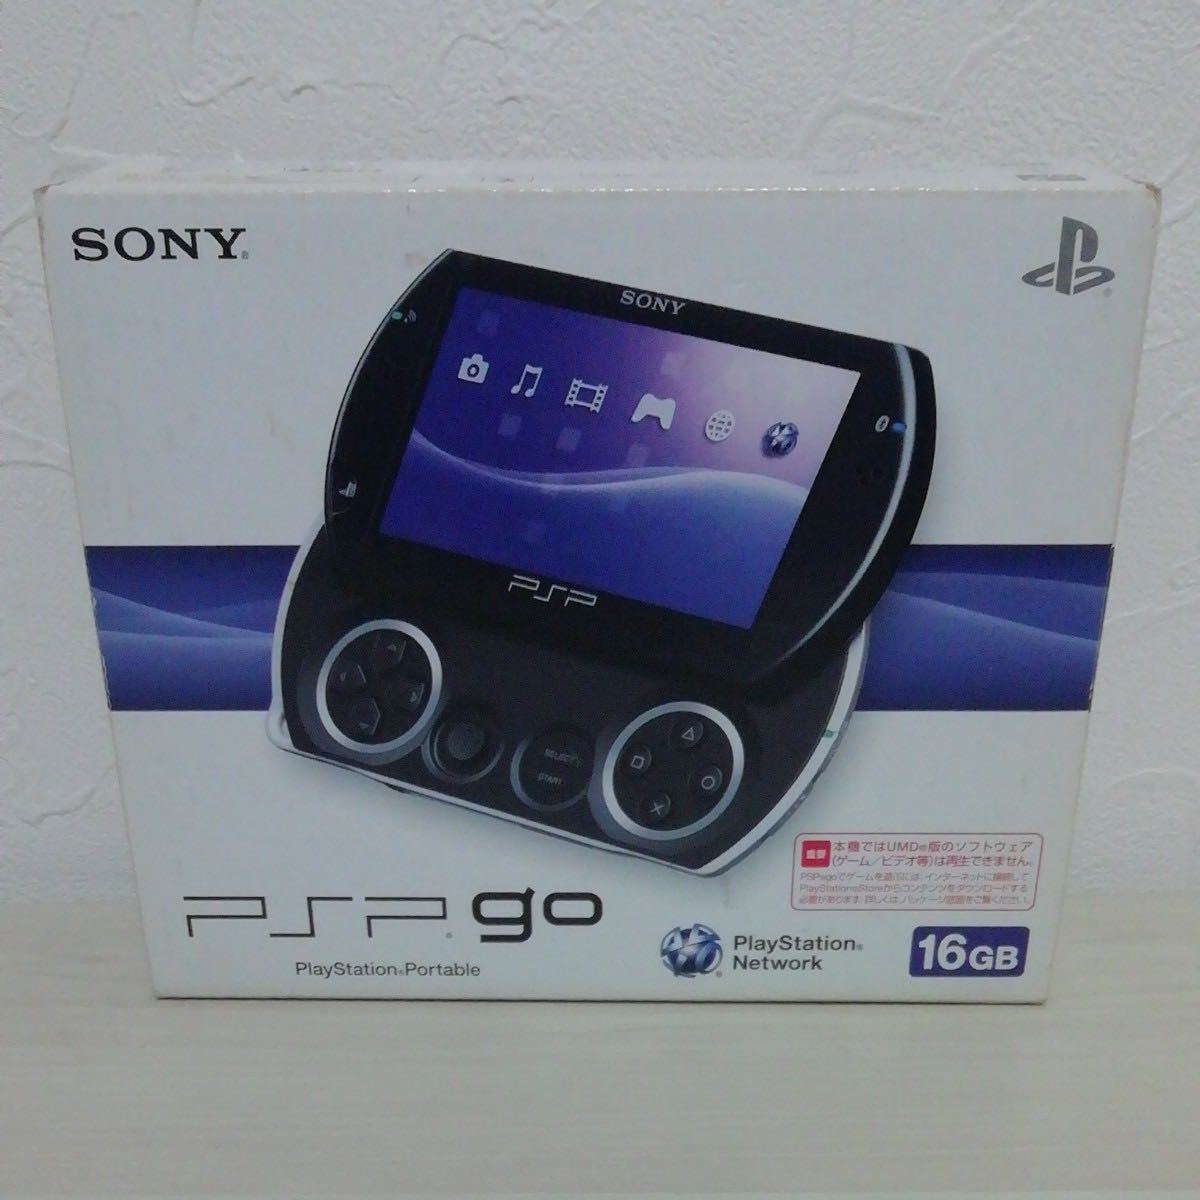 SONY PSP go ピアノブラック プレイステーション・ポータブルgo ソニー